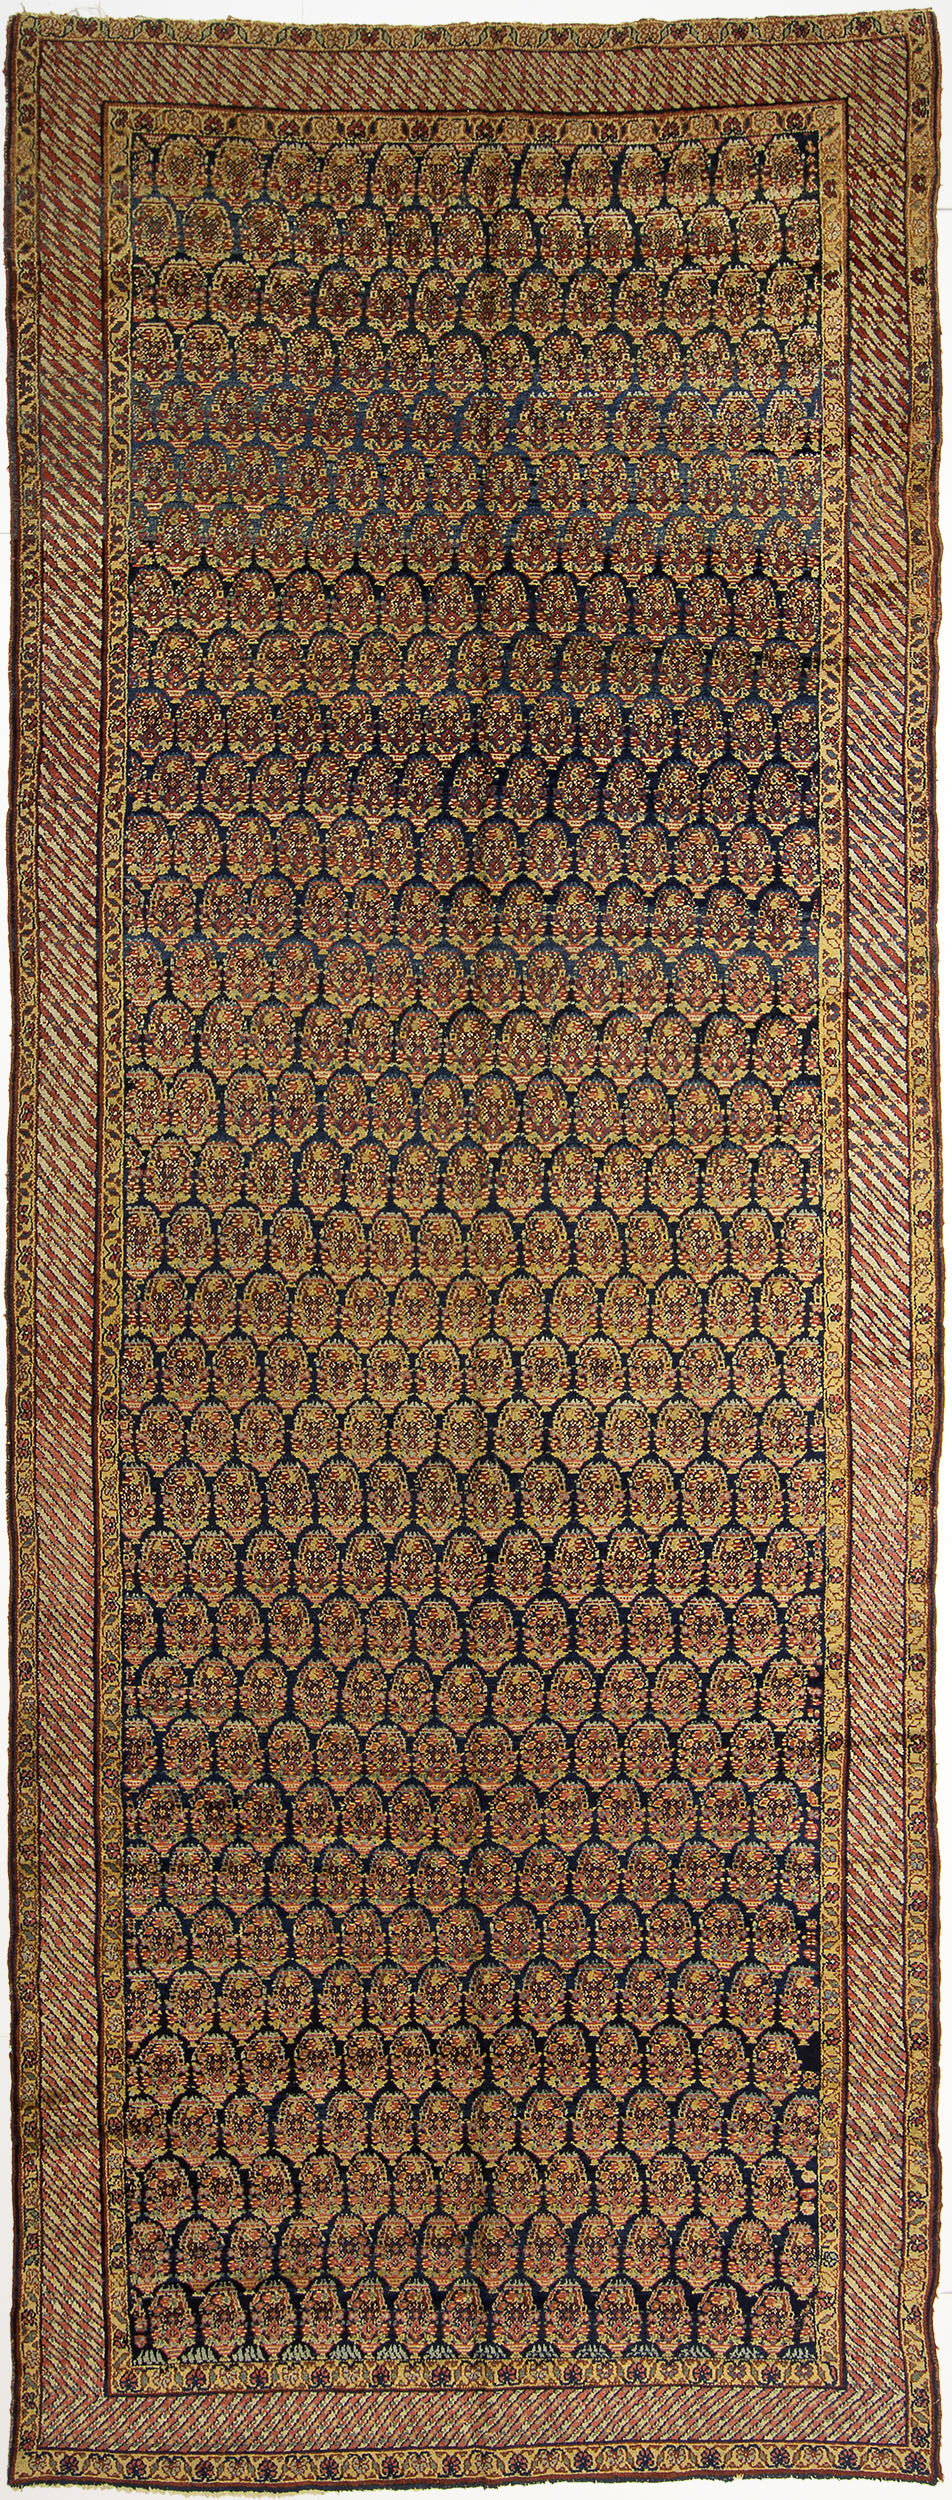 Sehna Kurd Gallery Carpet 16' 3" x 6' 2" 